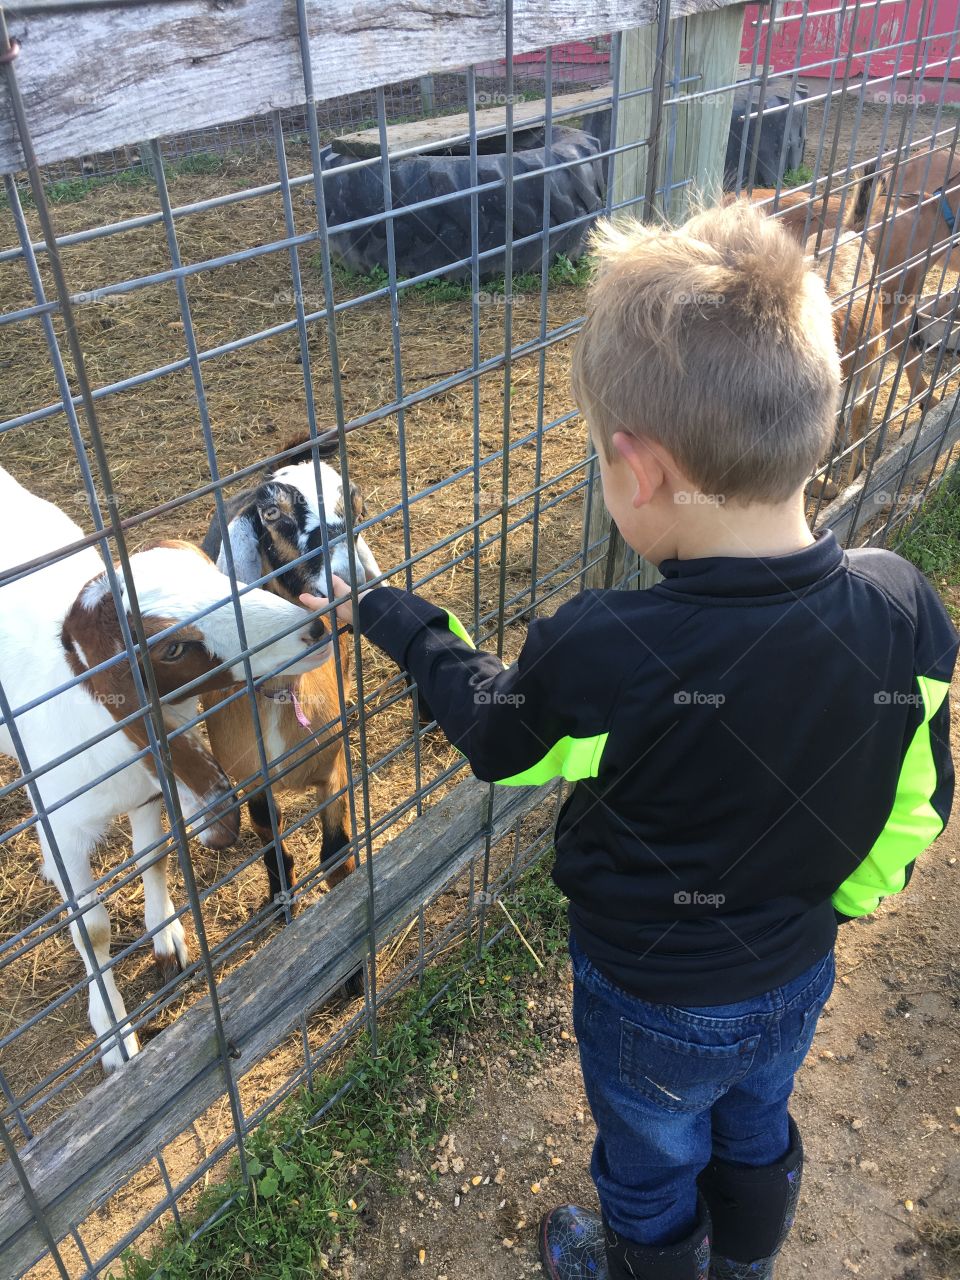 Feeding the goats! 